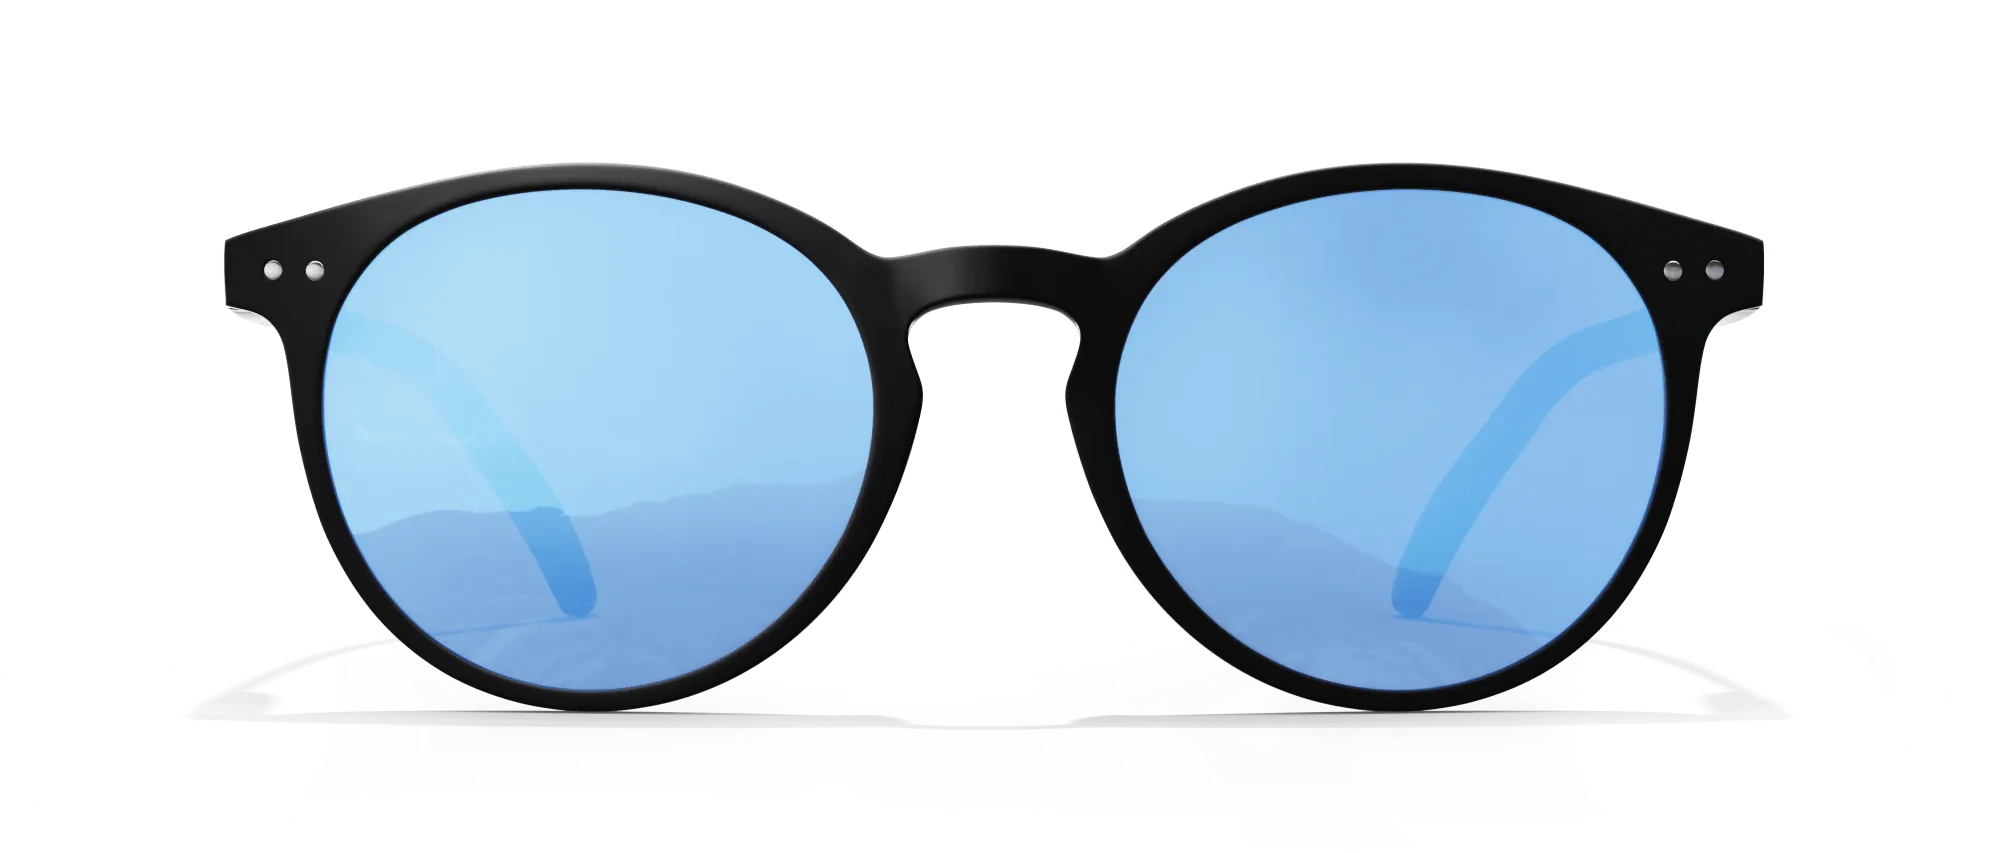 Black sunglasses with blue lenses